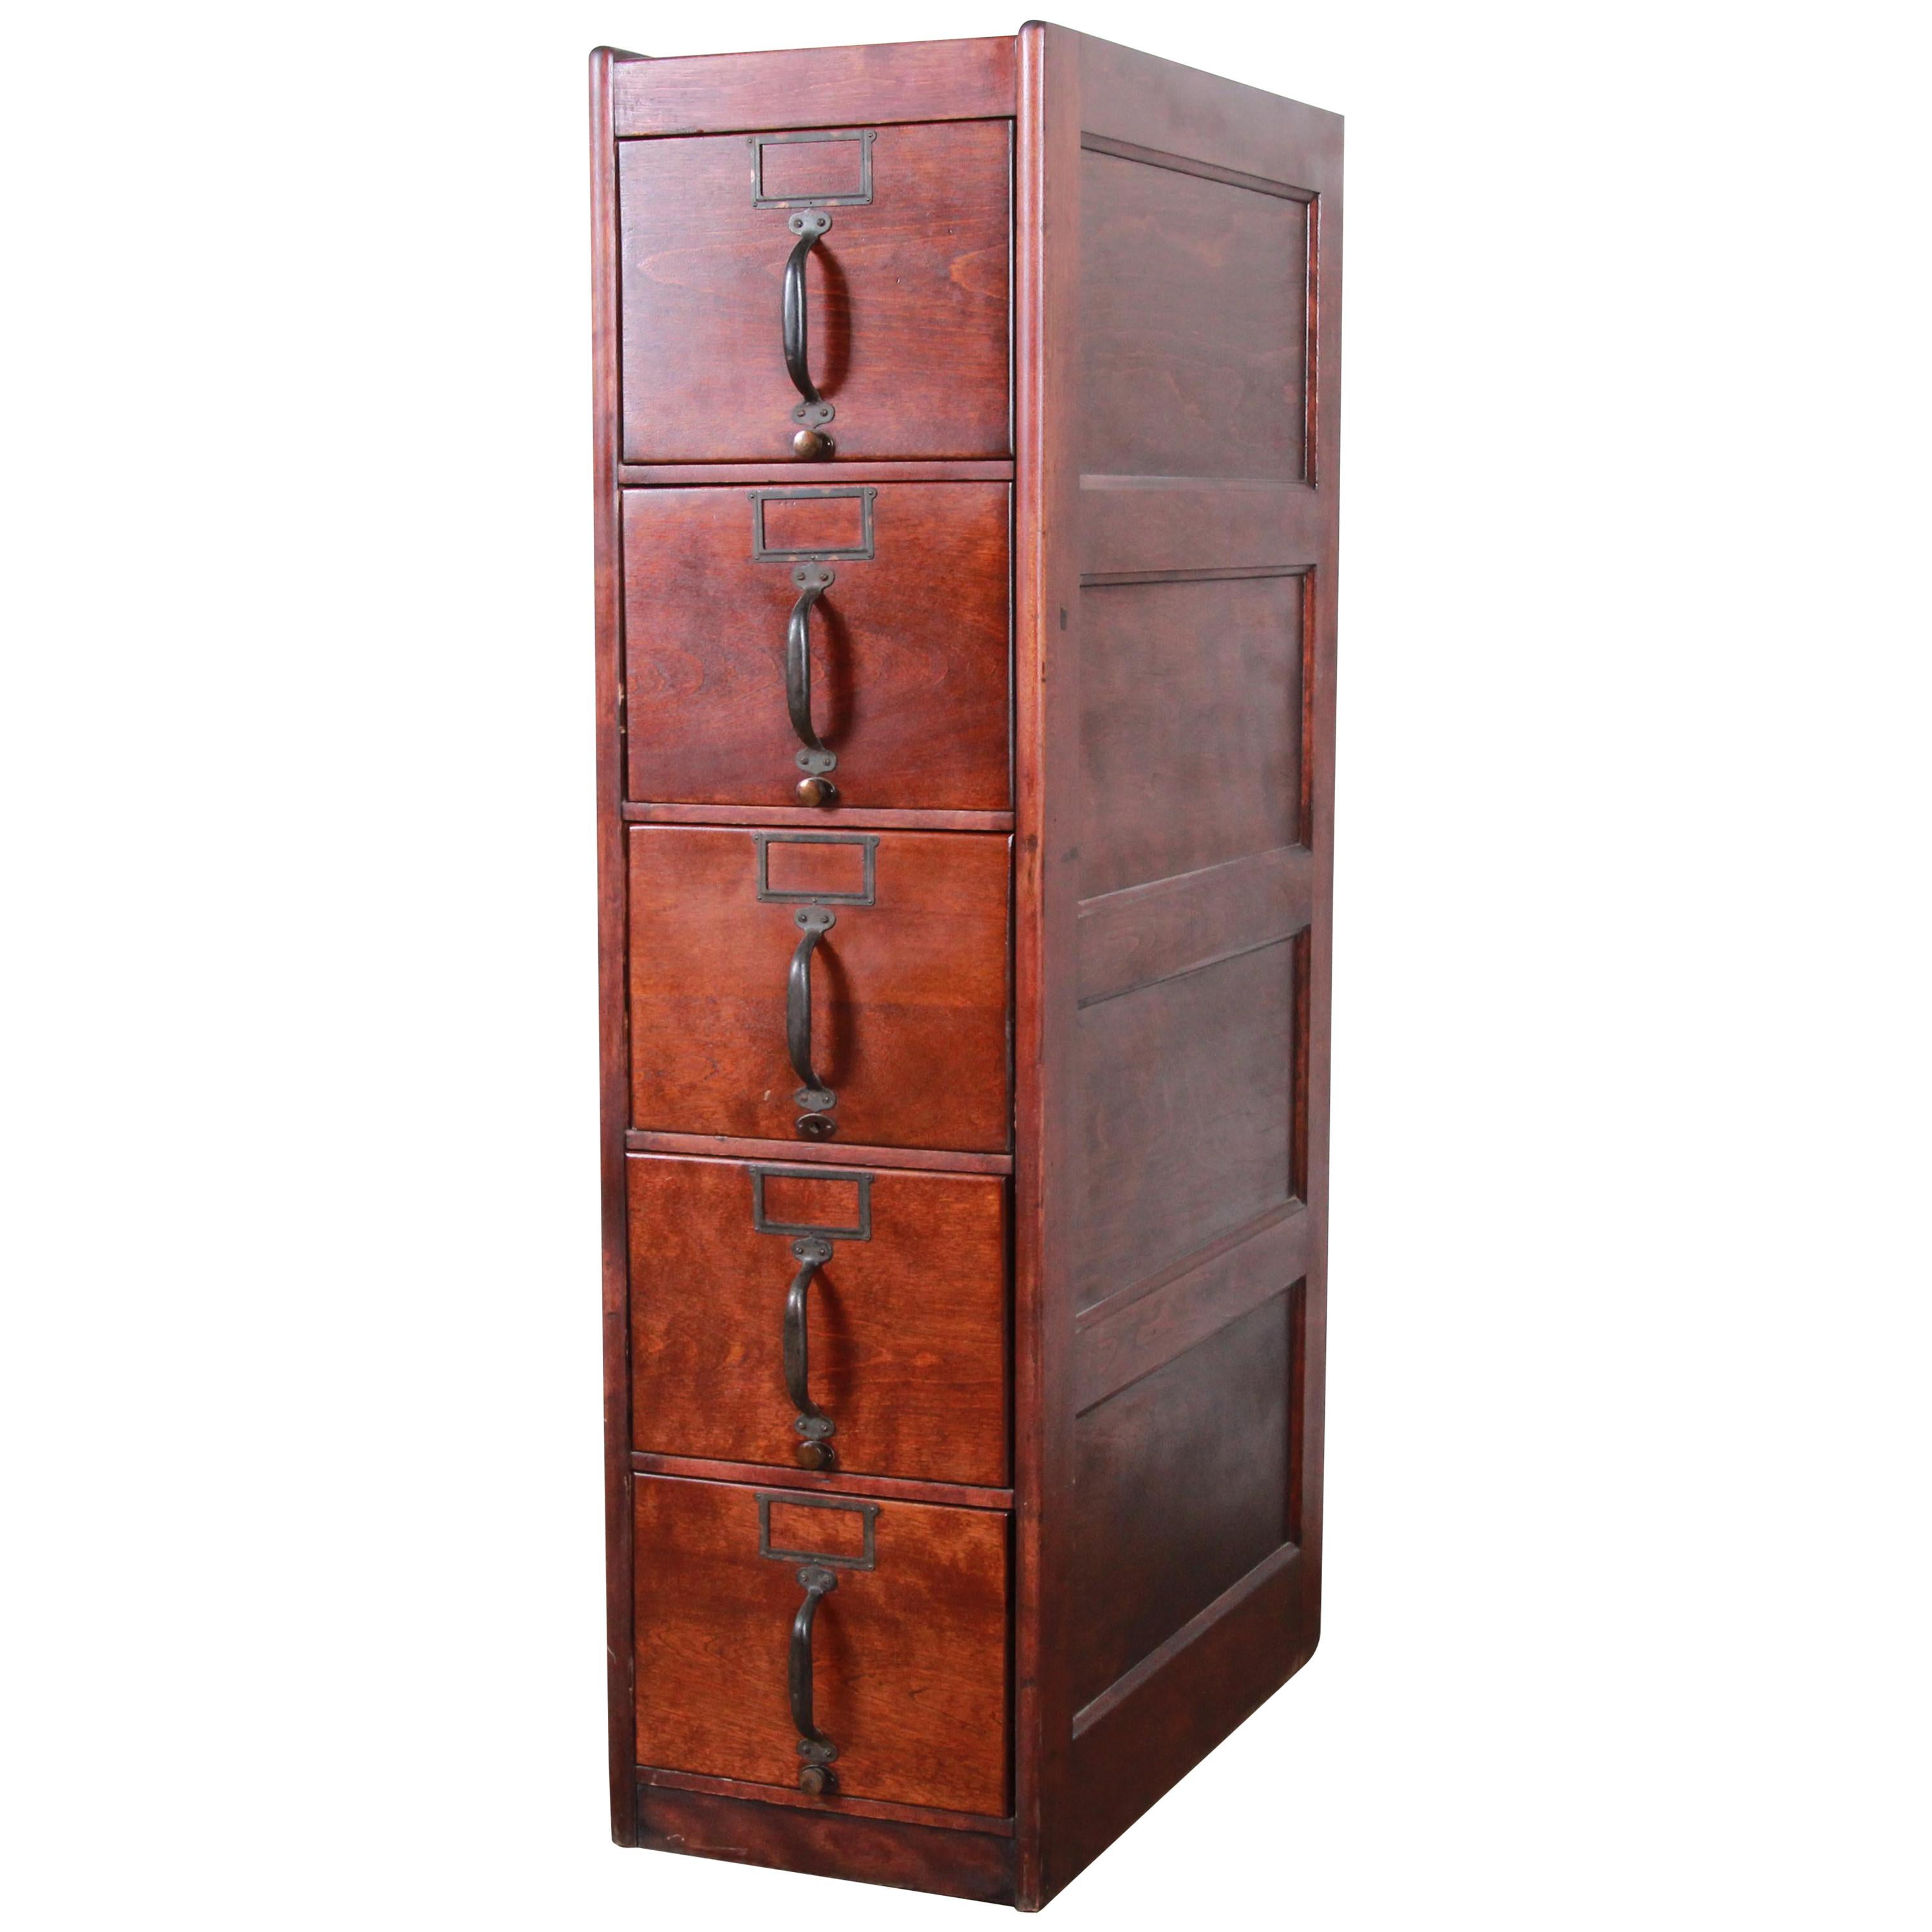 Antique 5-Drawer Wood File Cabinet